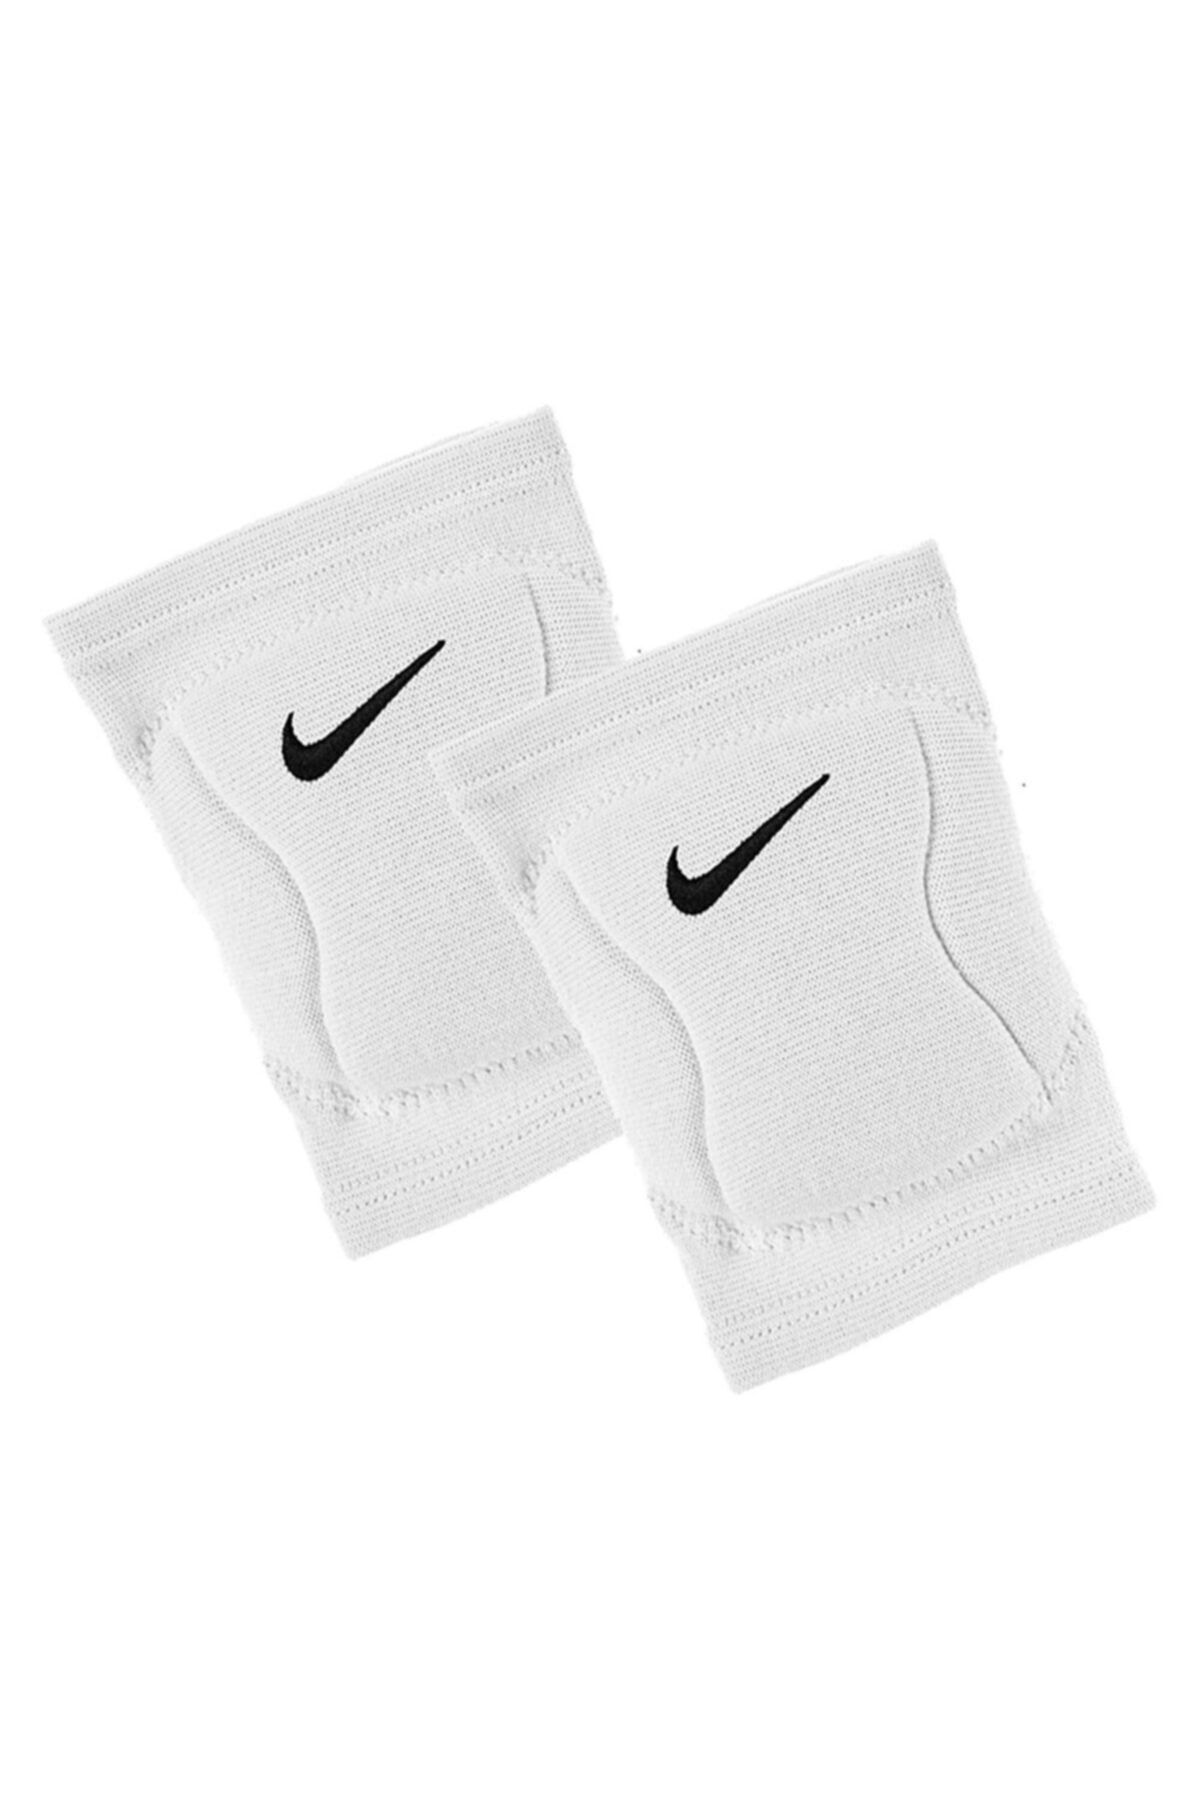 Nike Streak Volleyball Knee Pad Ce Dizlik - N.vp.07.100.ml